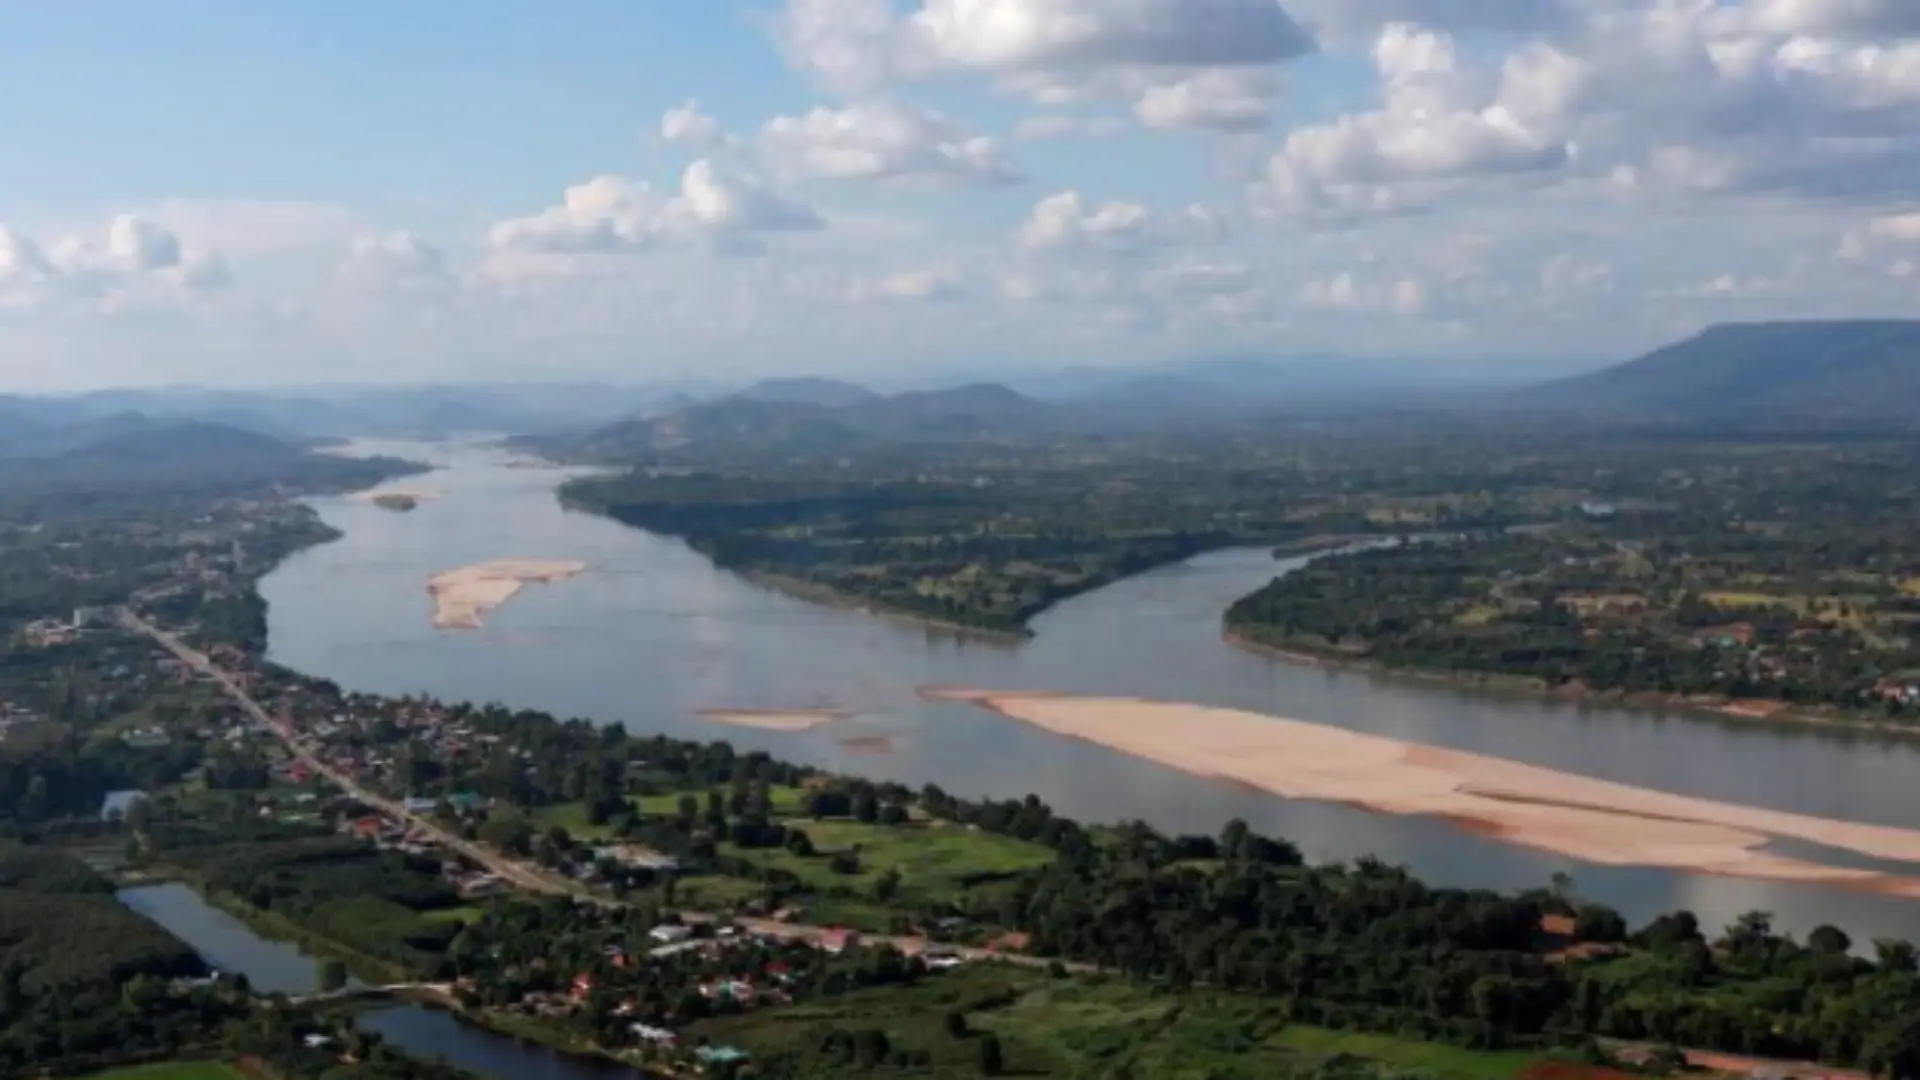 Apakah kegunaan Sungai Mekong bagi masyarakat Laos